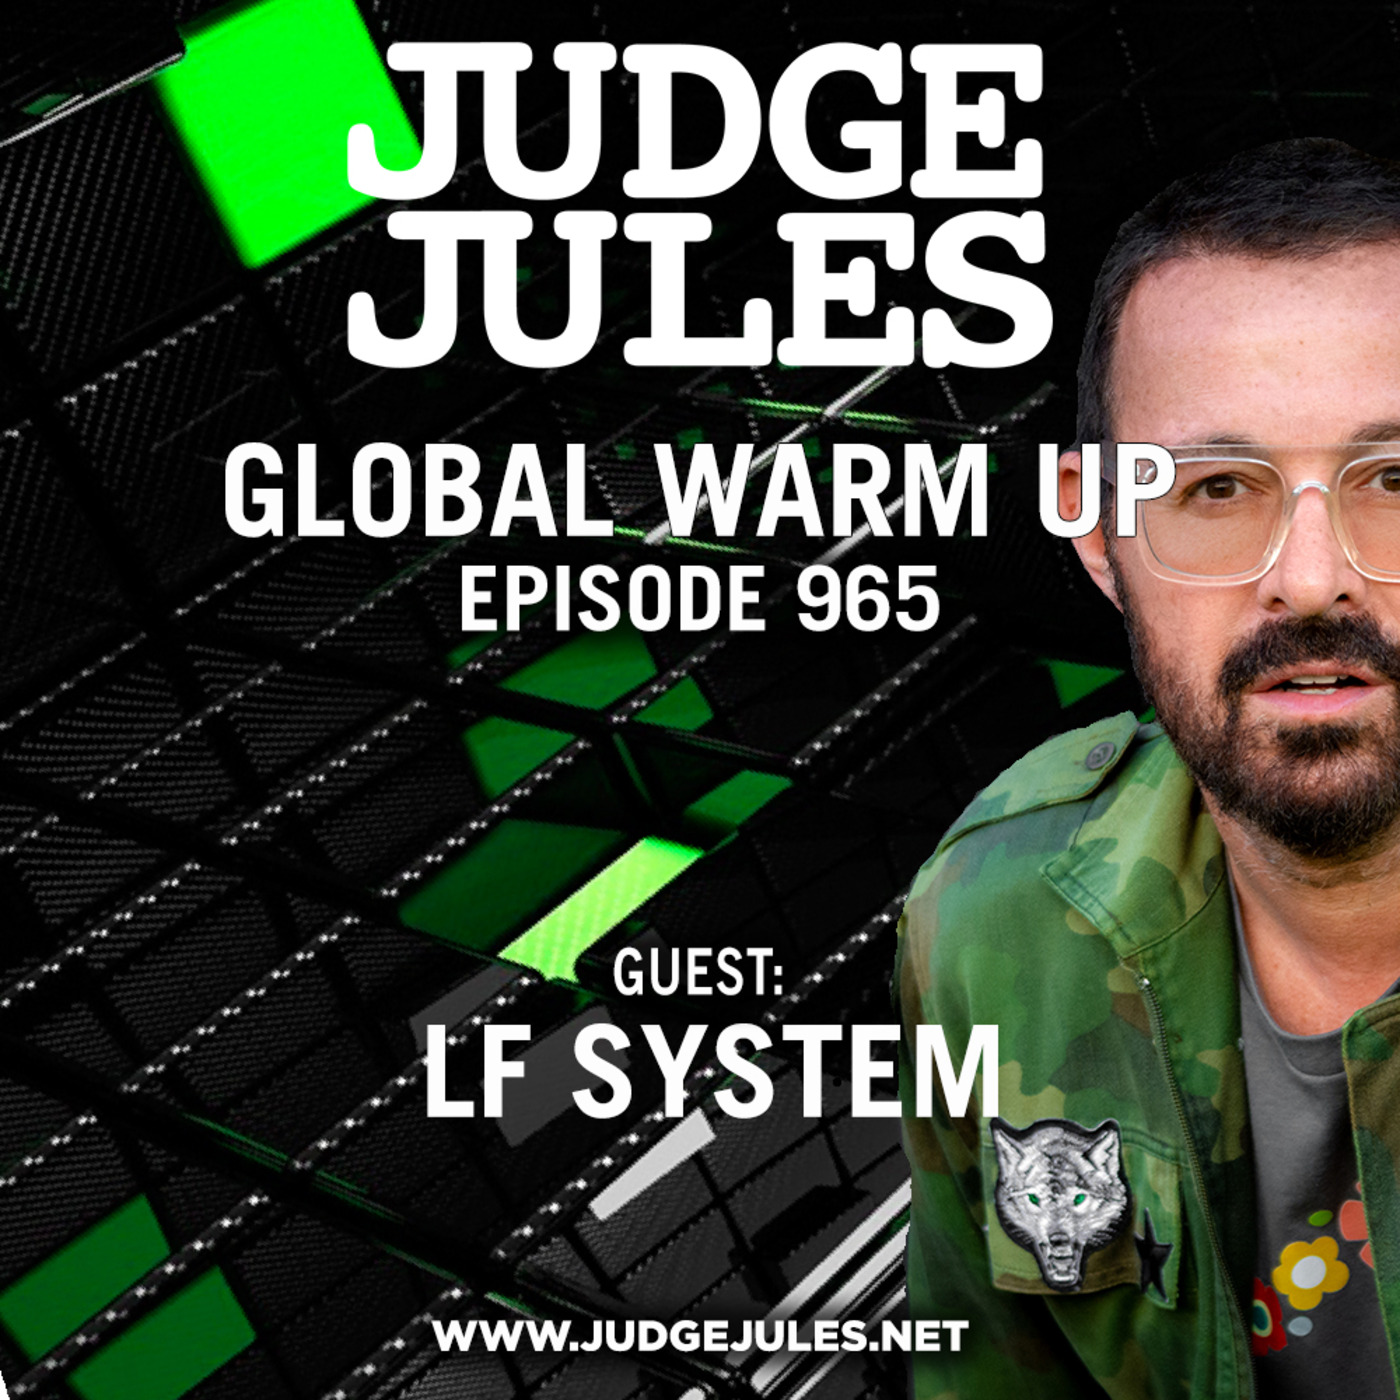 Episode 965: JUDGE JULES PRESENTS THE GLOBAL WARM UP EPISODE 965